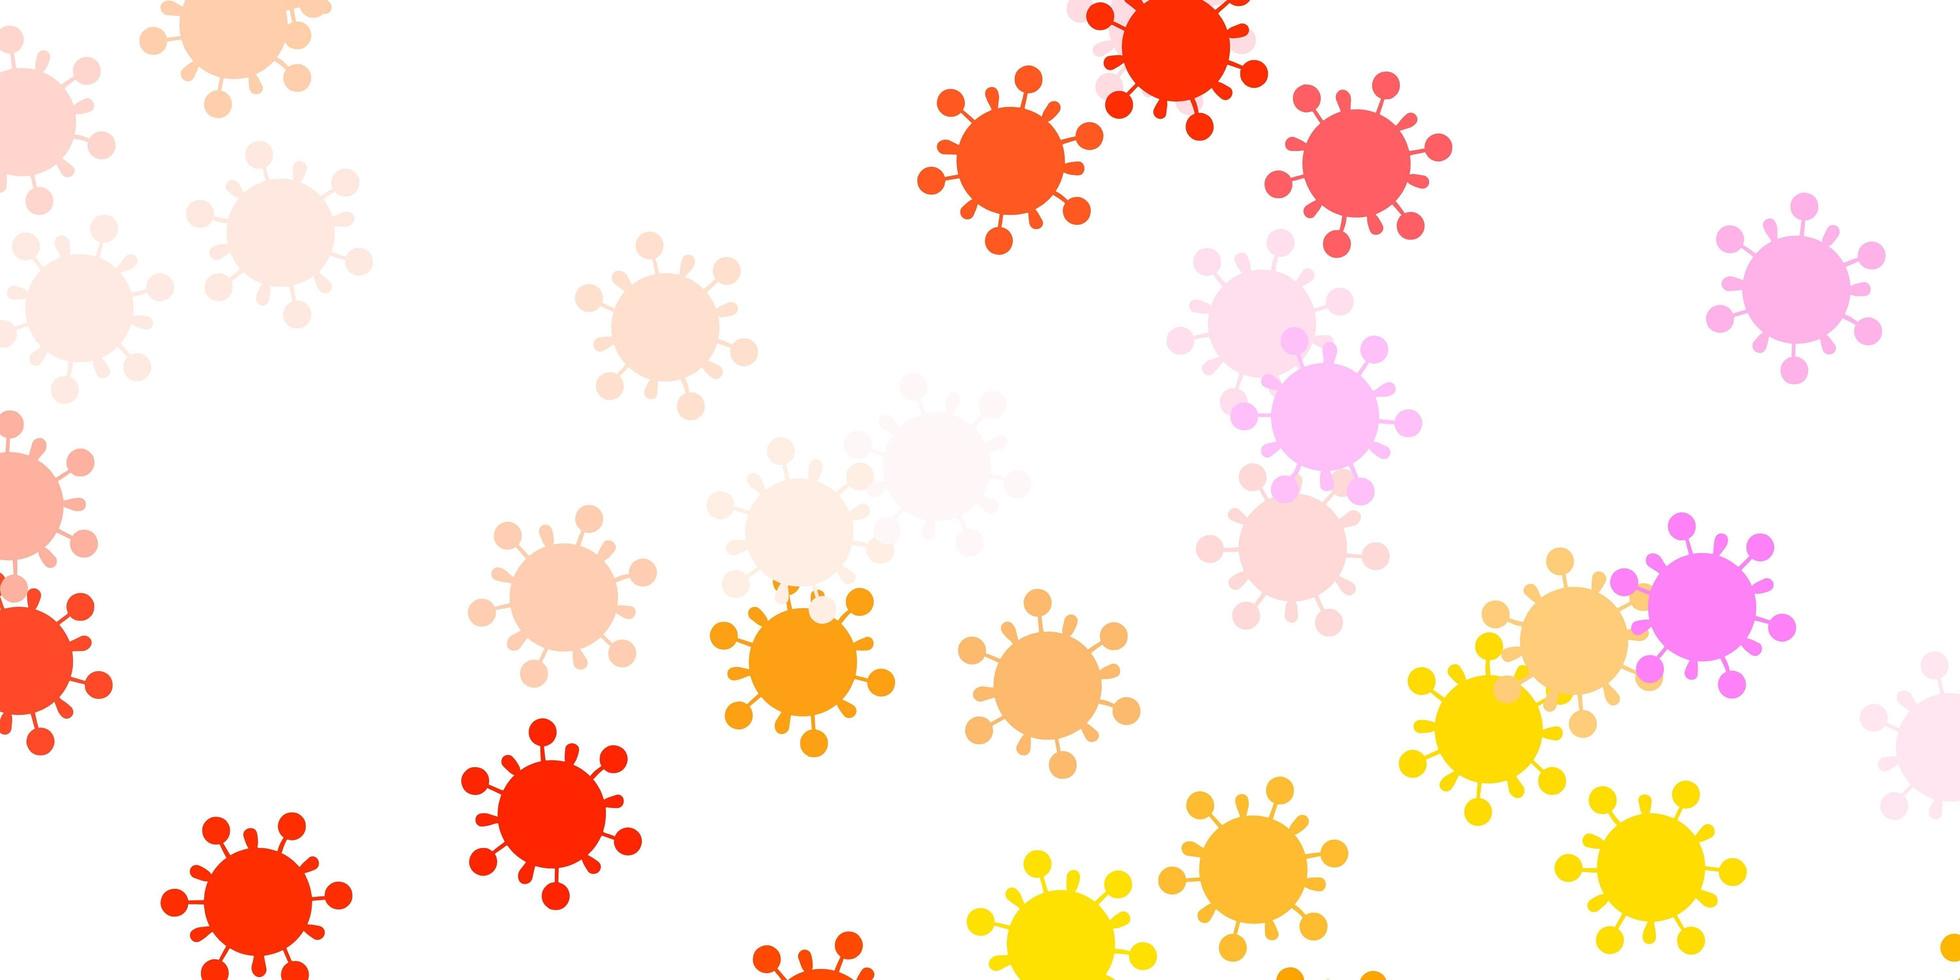 textura de vector rosa claro, amarillo con símbolos de enfermedades.